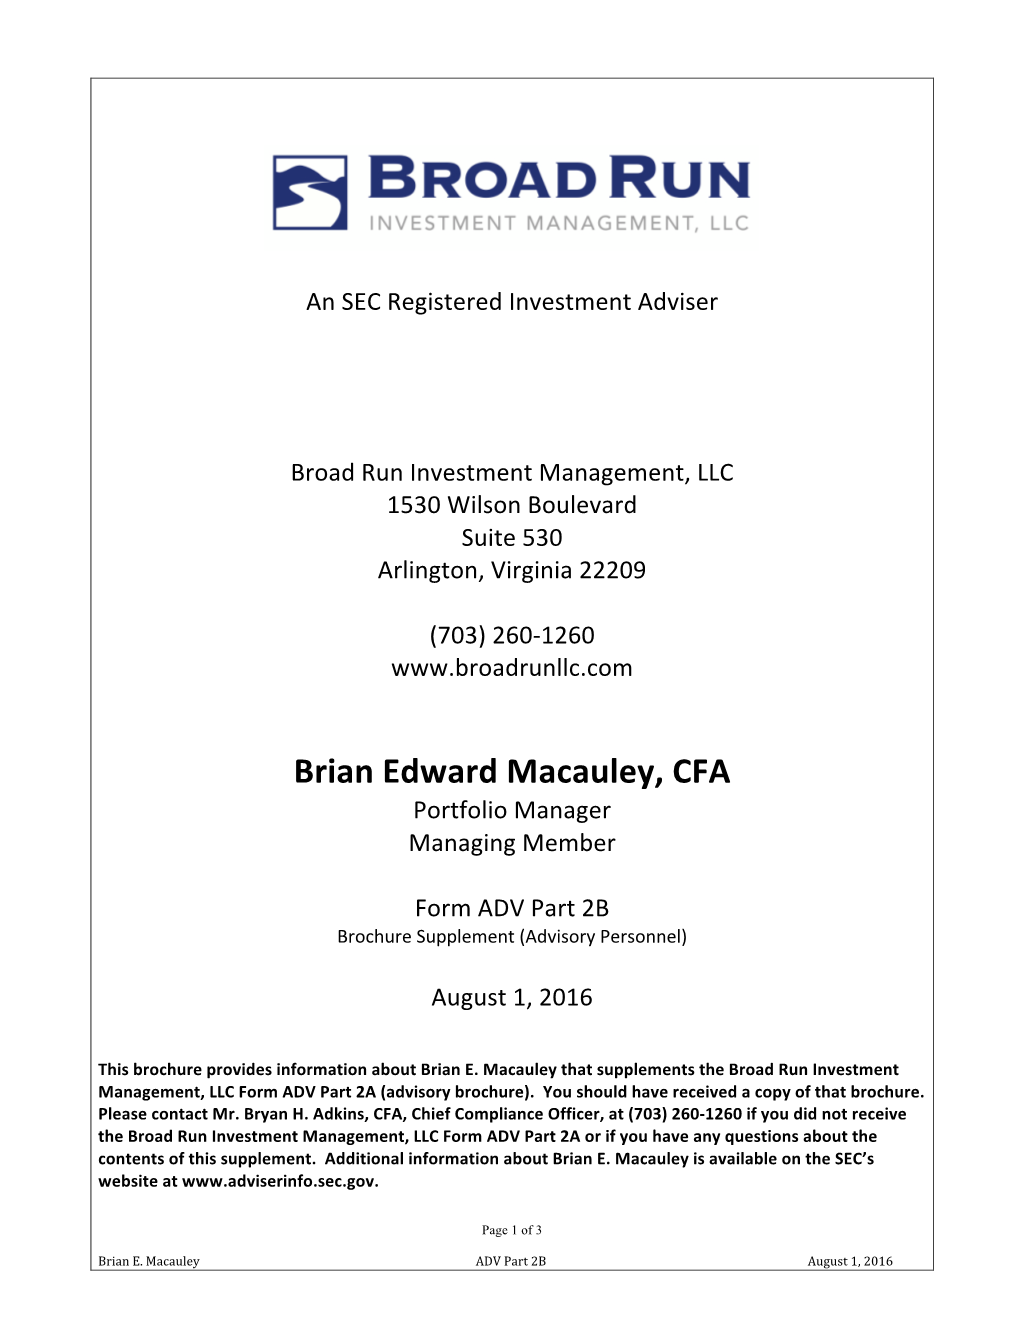 Brian Edward Macauley, CFA Portfolio Manager Managing Member